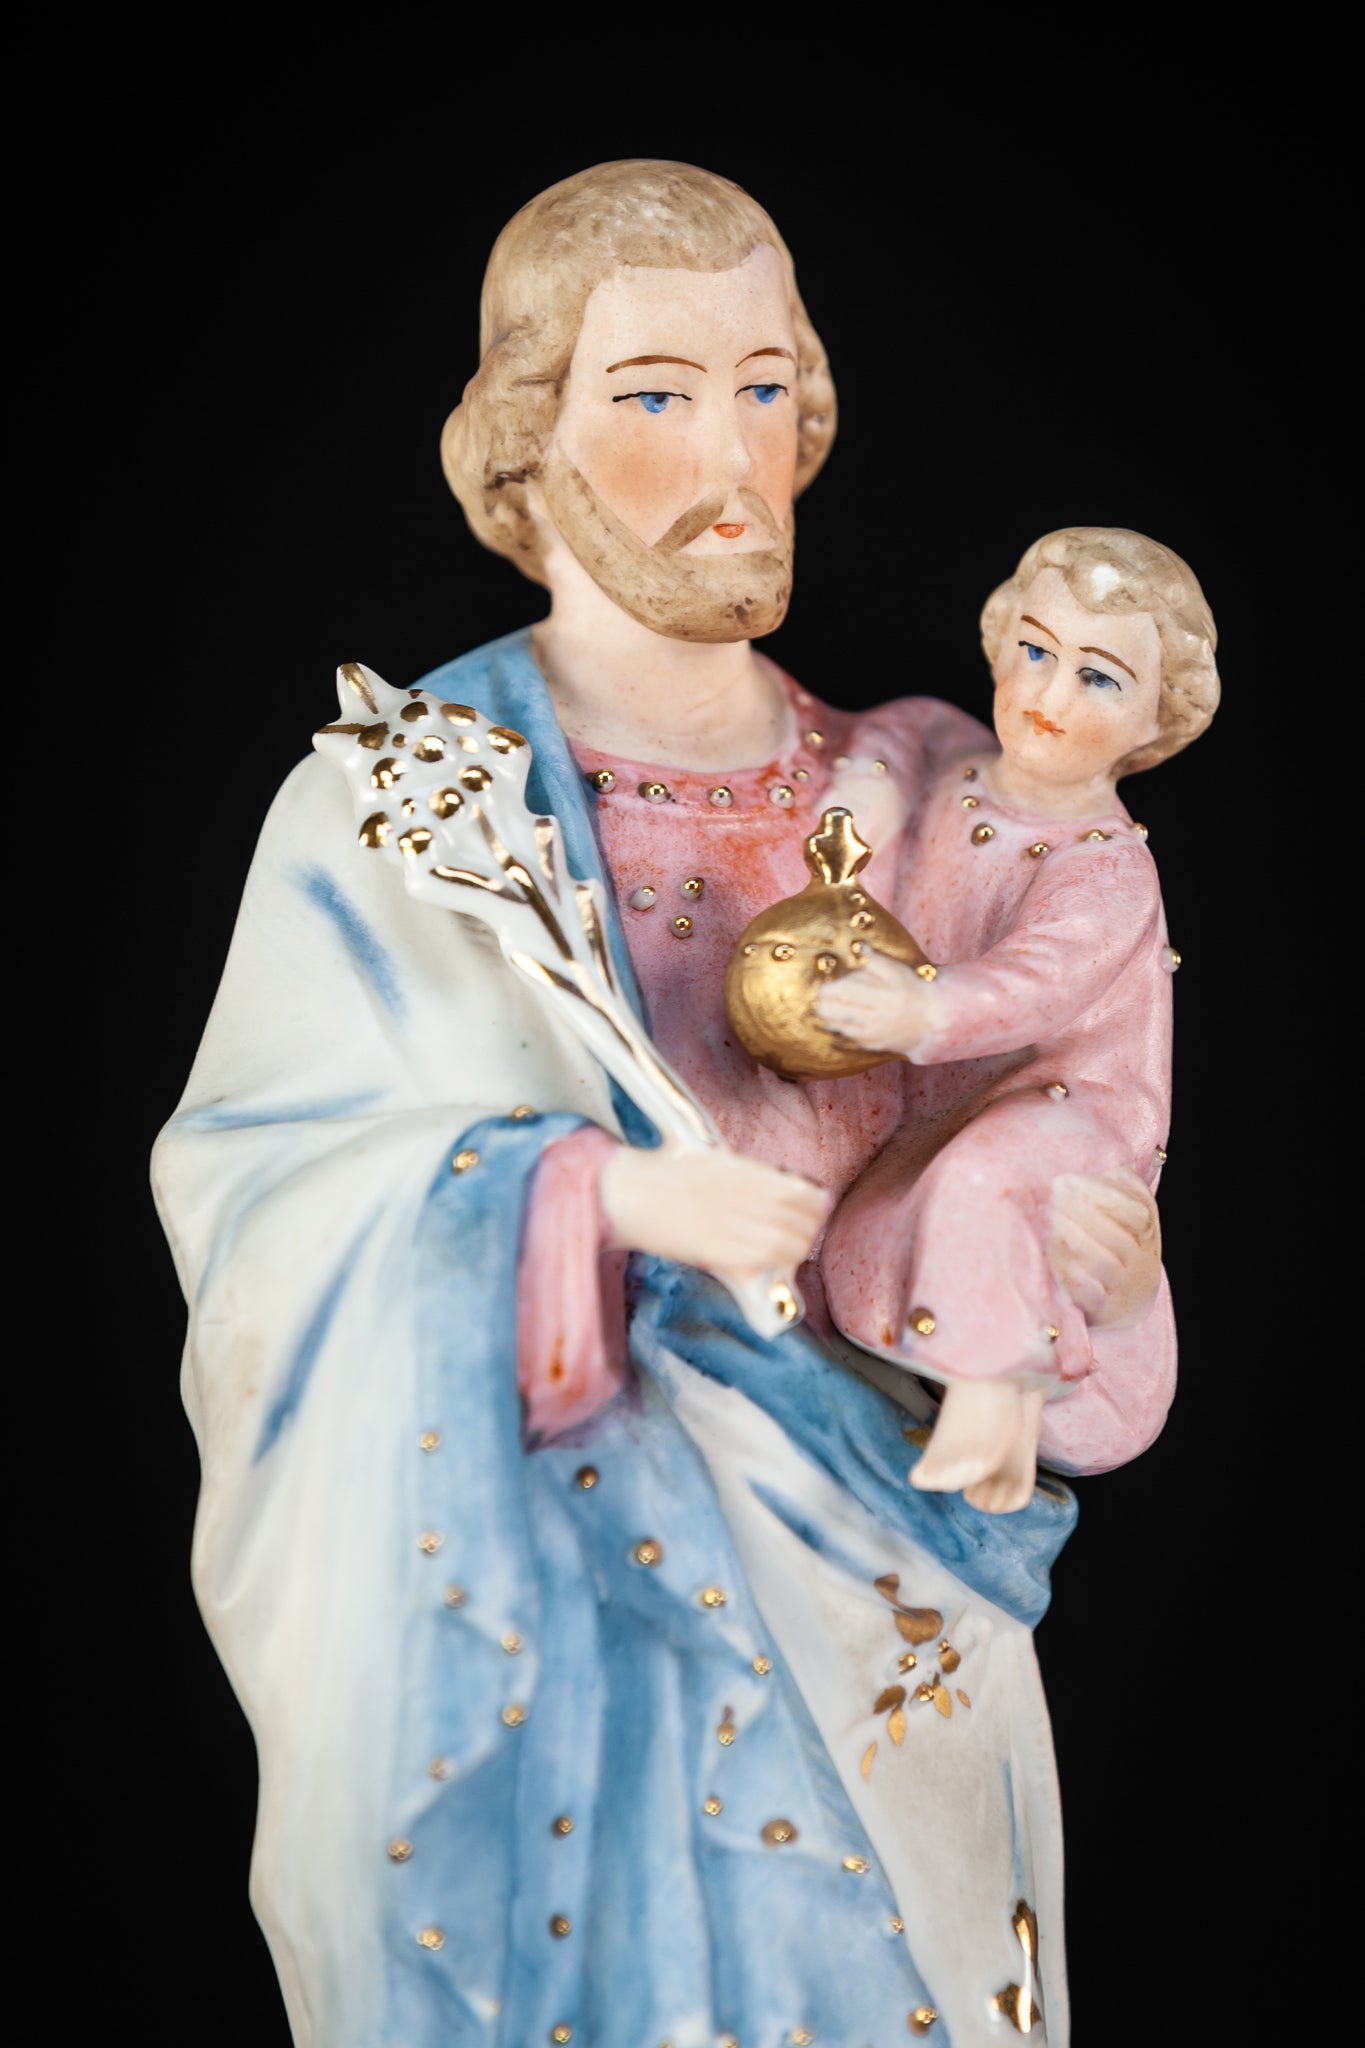 St Joseph with Child Jesus Porcelain Statue | 6.9"